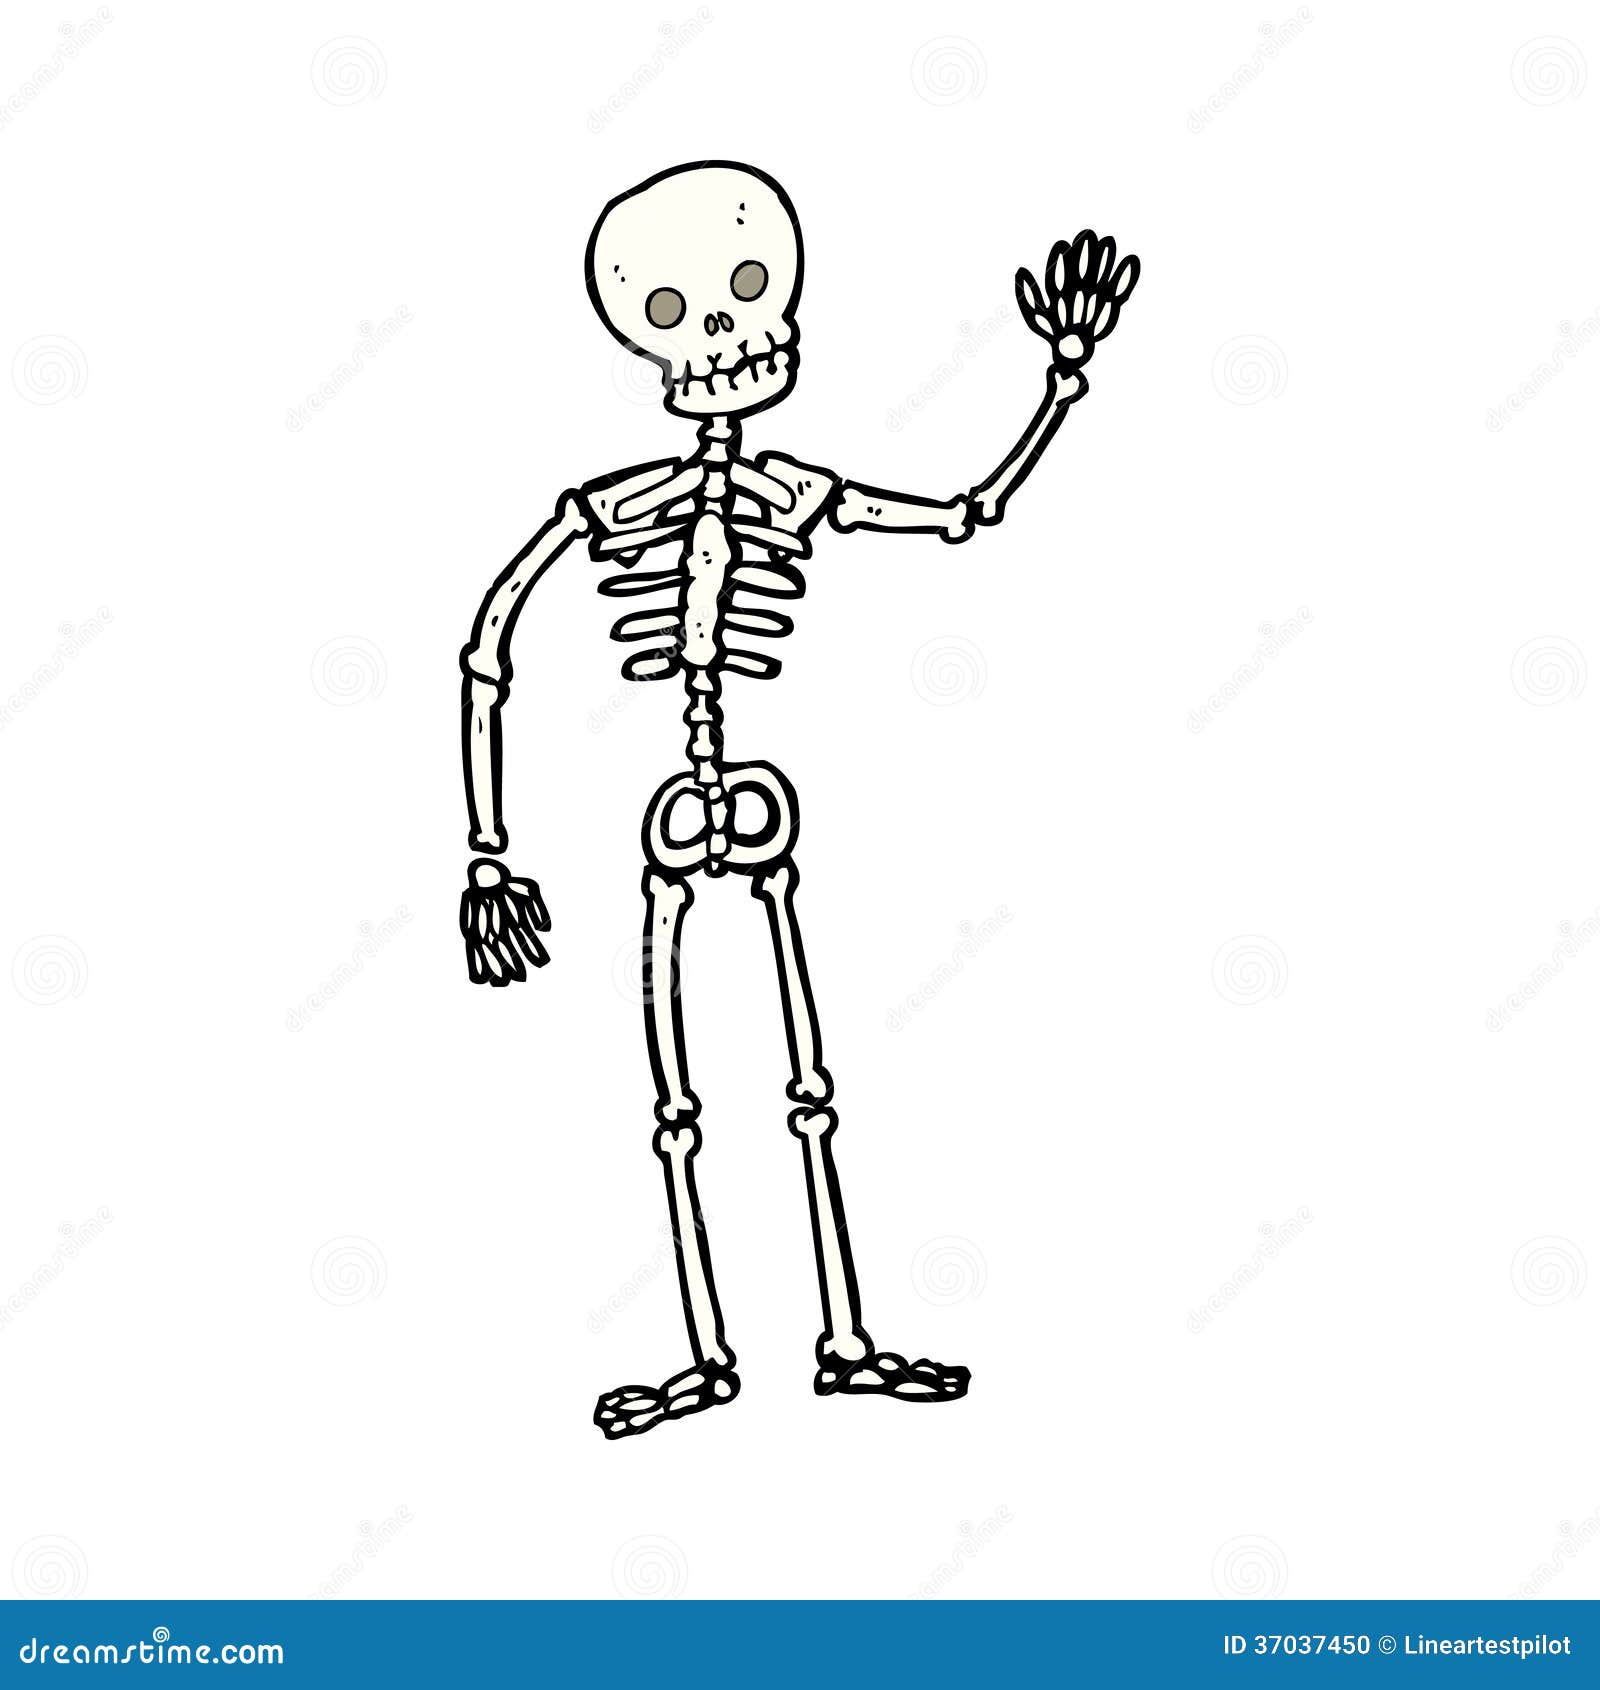 Cartoon waving skeleton stock vector. Illustration of skeleton - 37037450